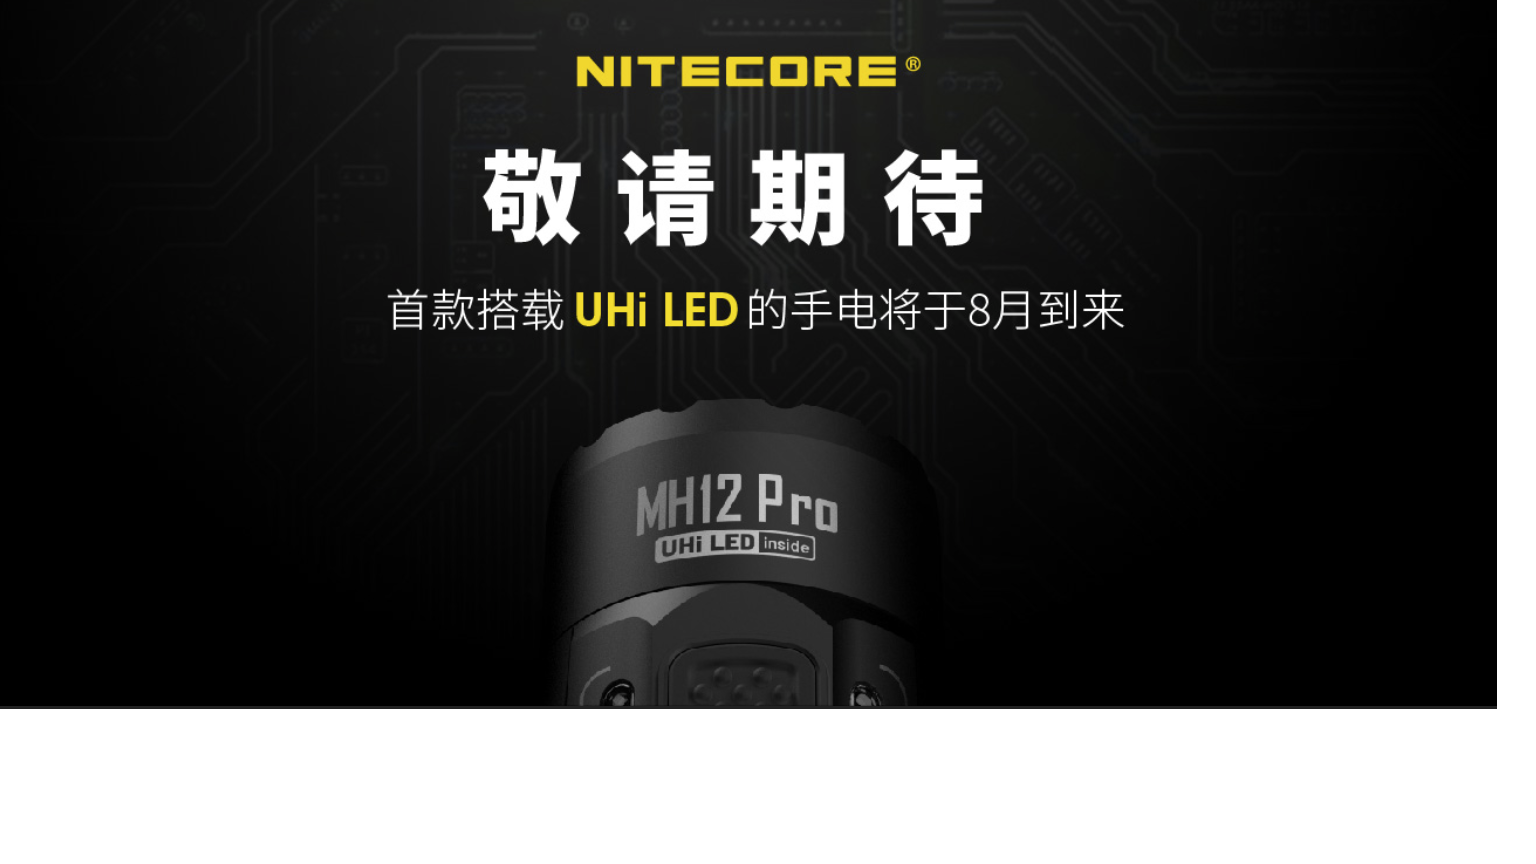 NiteLab Ultra High Intensity UHi LED